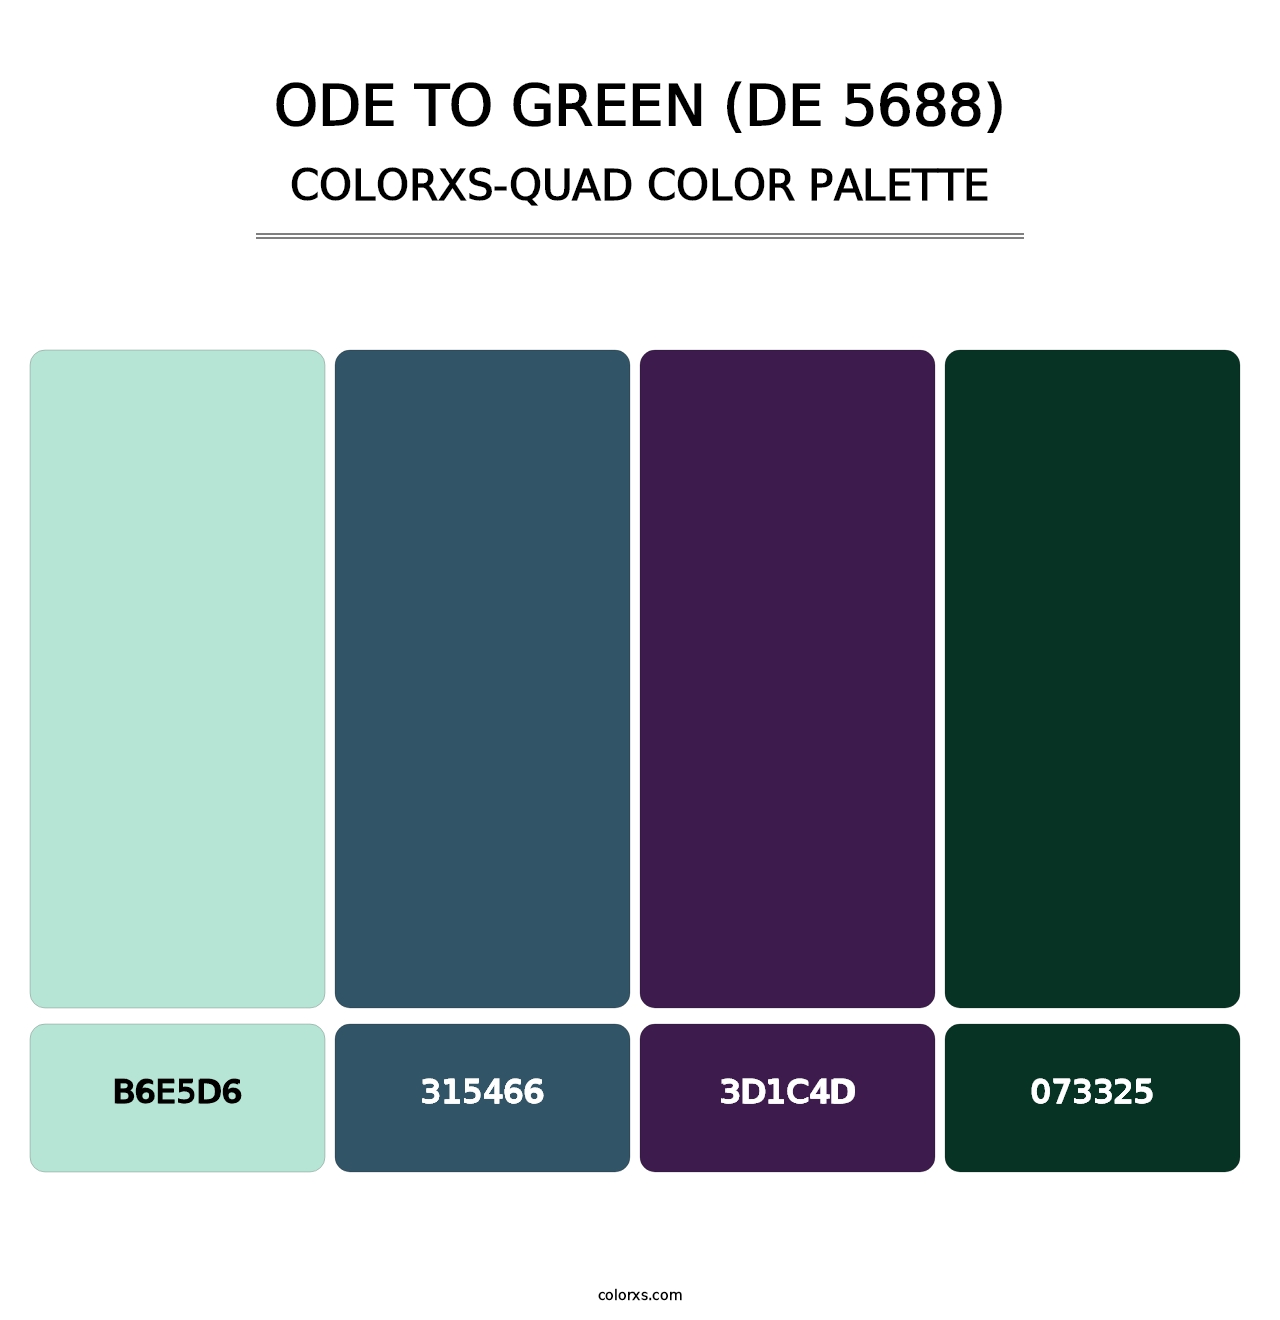 Ode to Green (DE 5688) - Colorxs Quad Palette